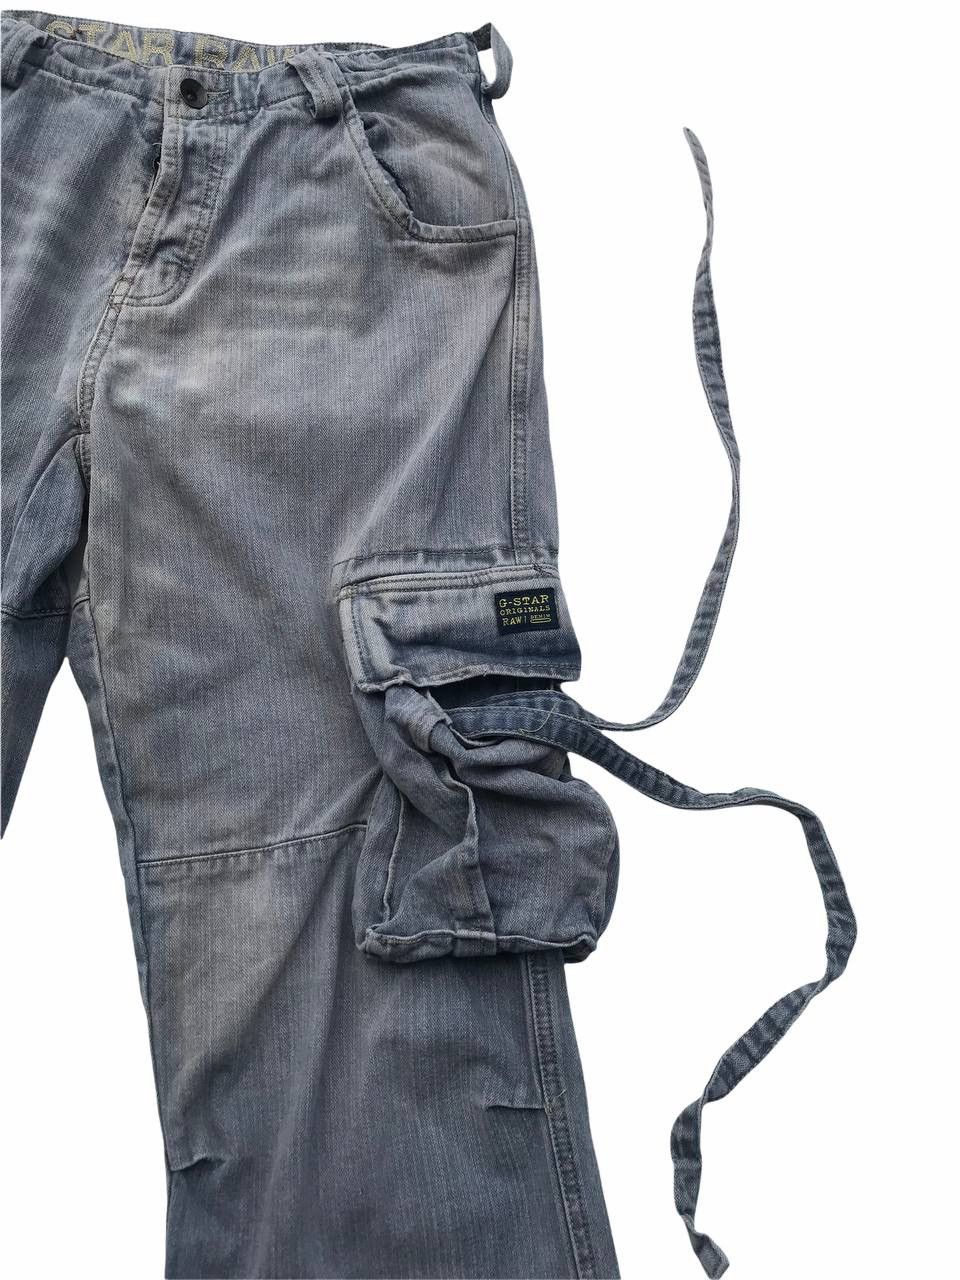 Gstar Gstar Denim Cargo Multipocket Streetwear Fashion Pants Size US 31 - 5 Thumbnail